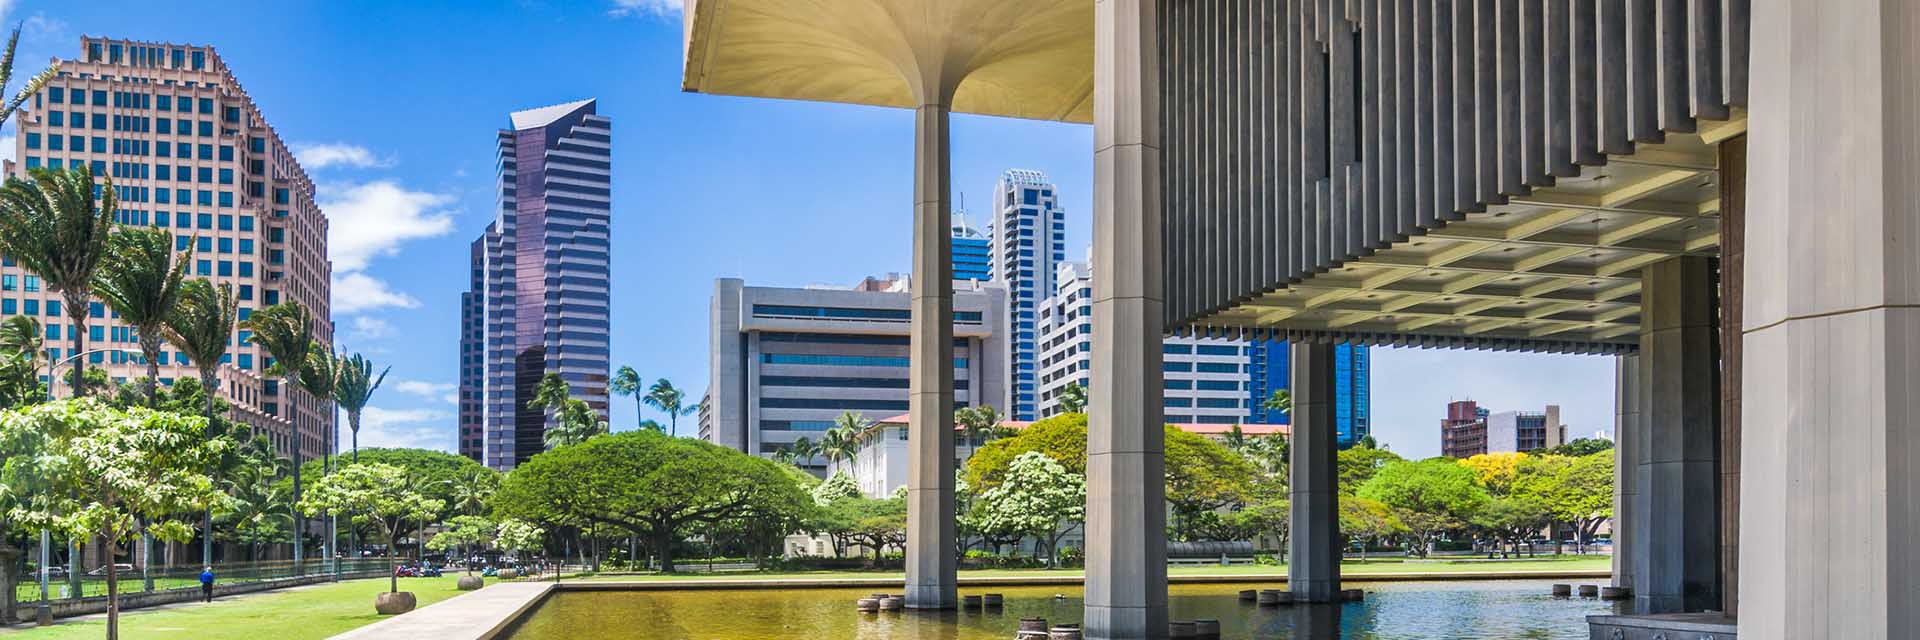 The skyline of modern high rise buildings of Honolulu, Hawaii